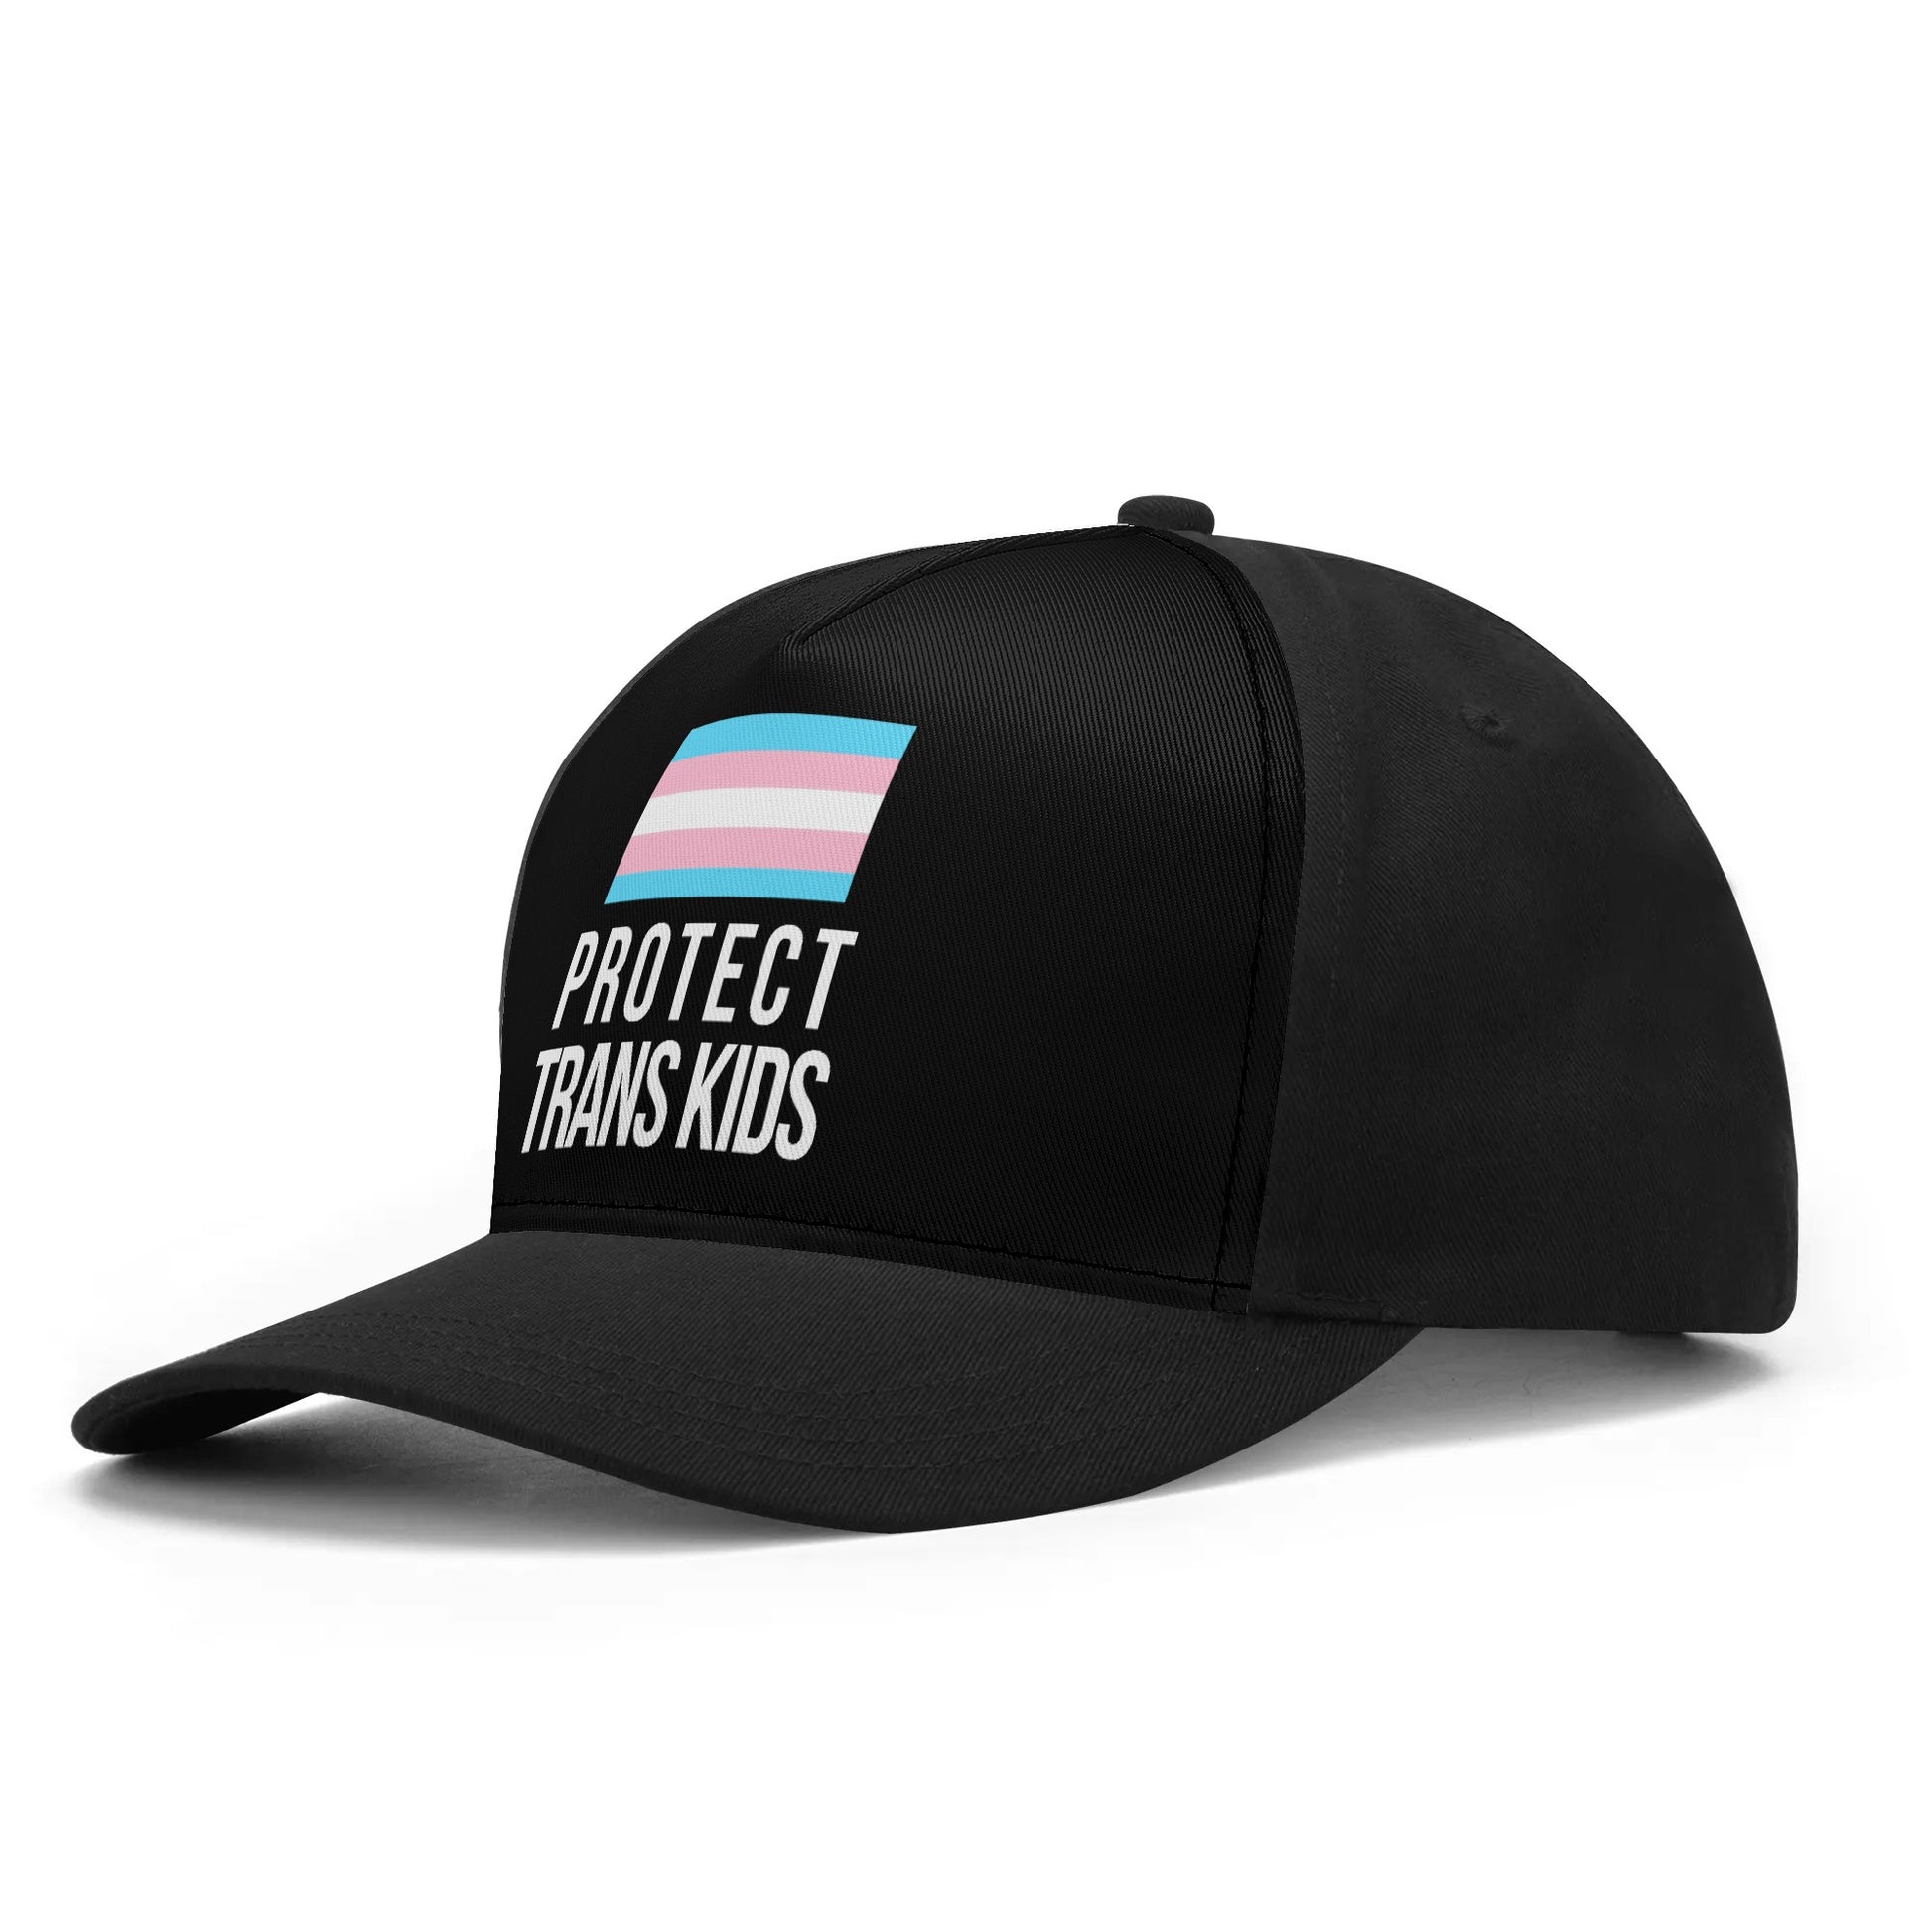 Protect Trans Kids Printed Baseball Cap - Rose Gold Co. Shop